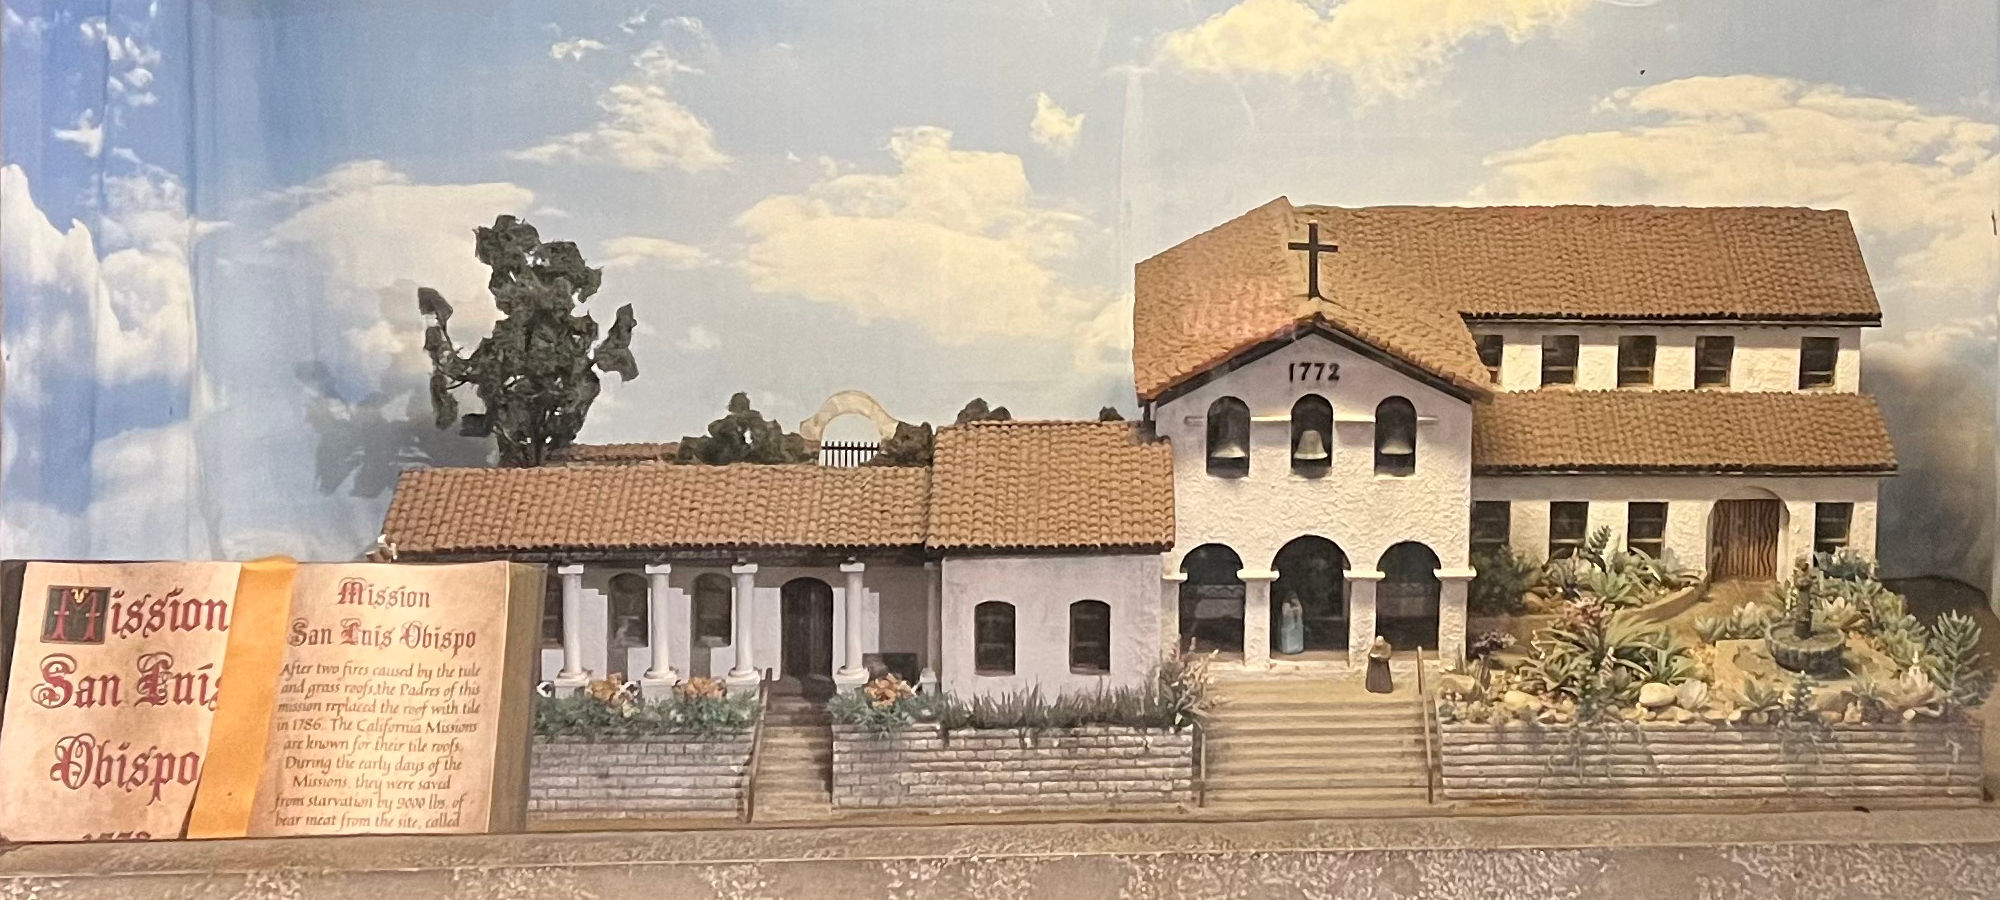 San Luis Obispo Mission Model